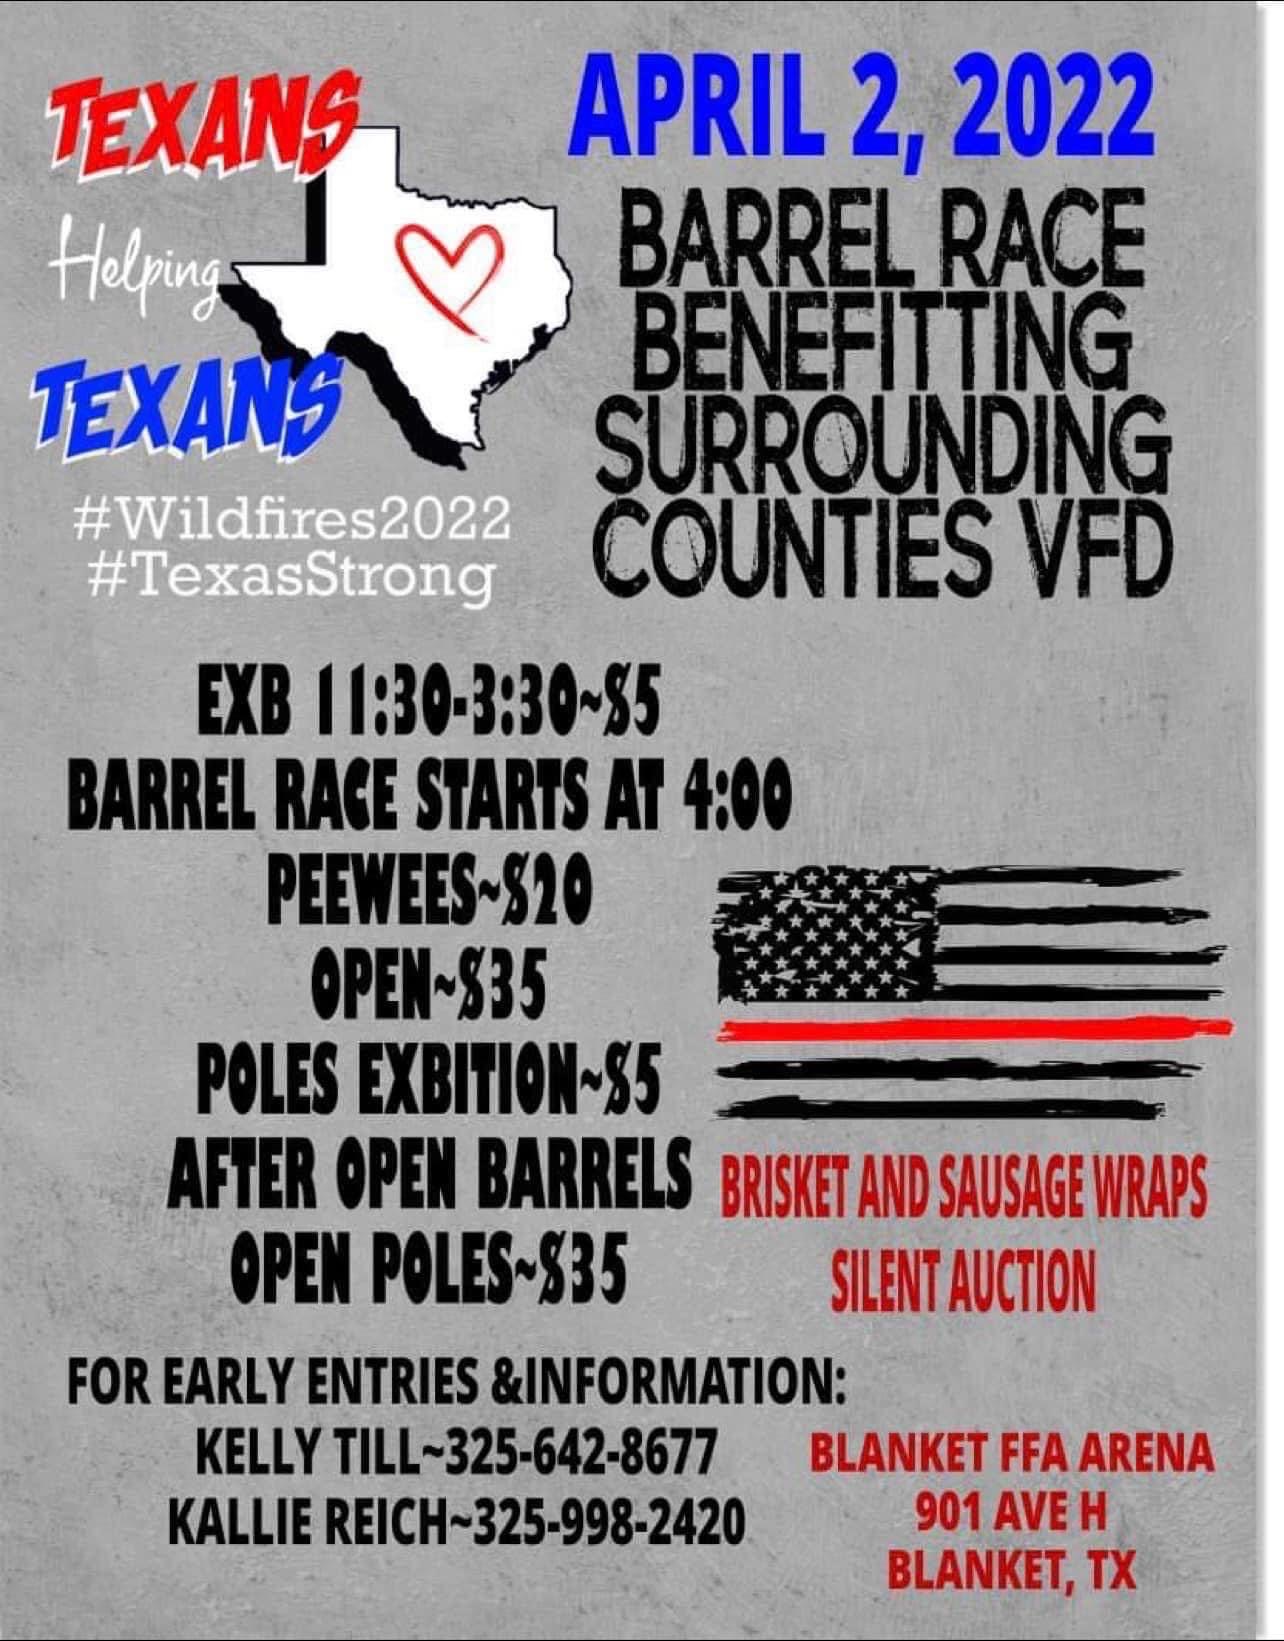 Texans Helping Texans Barrel Race 